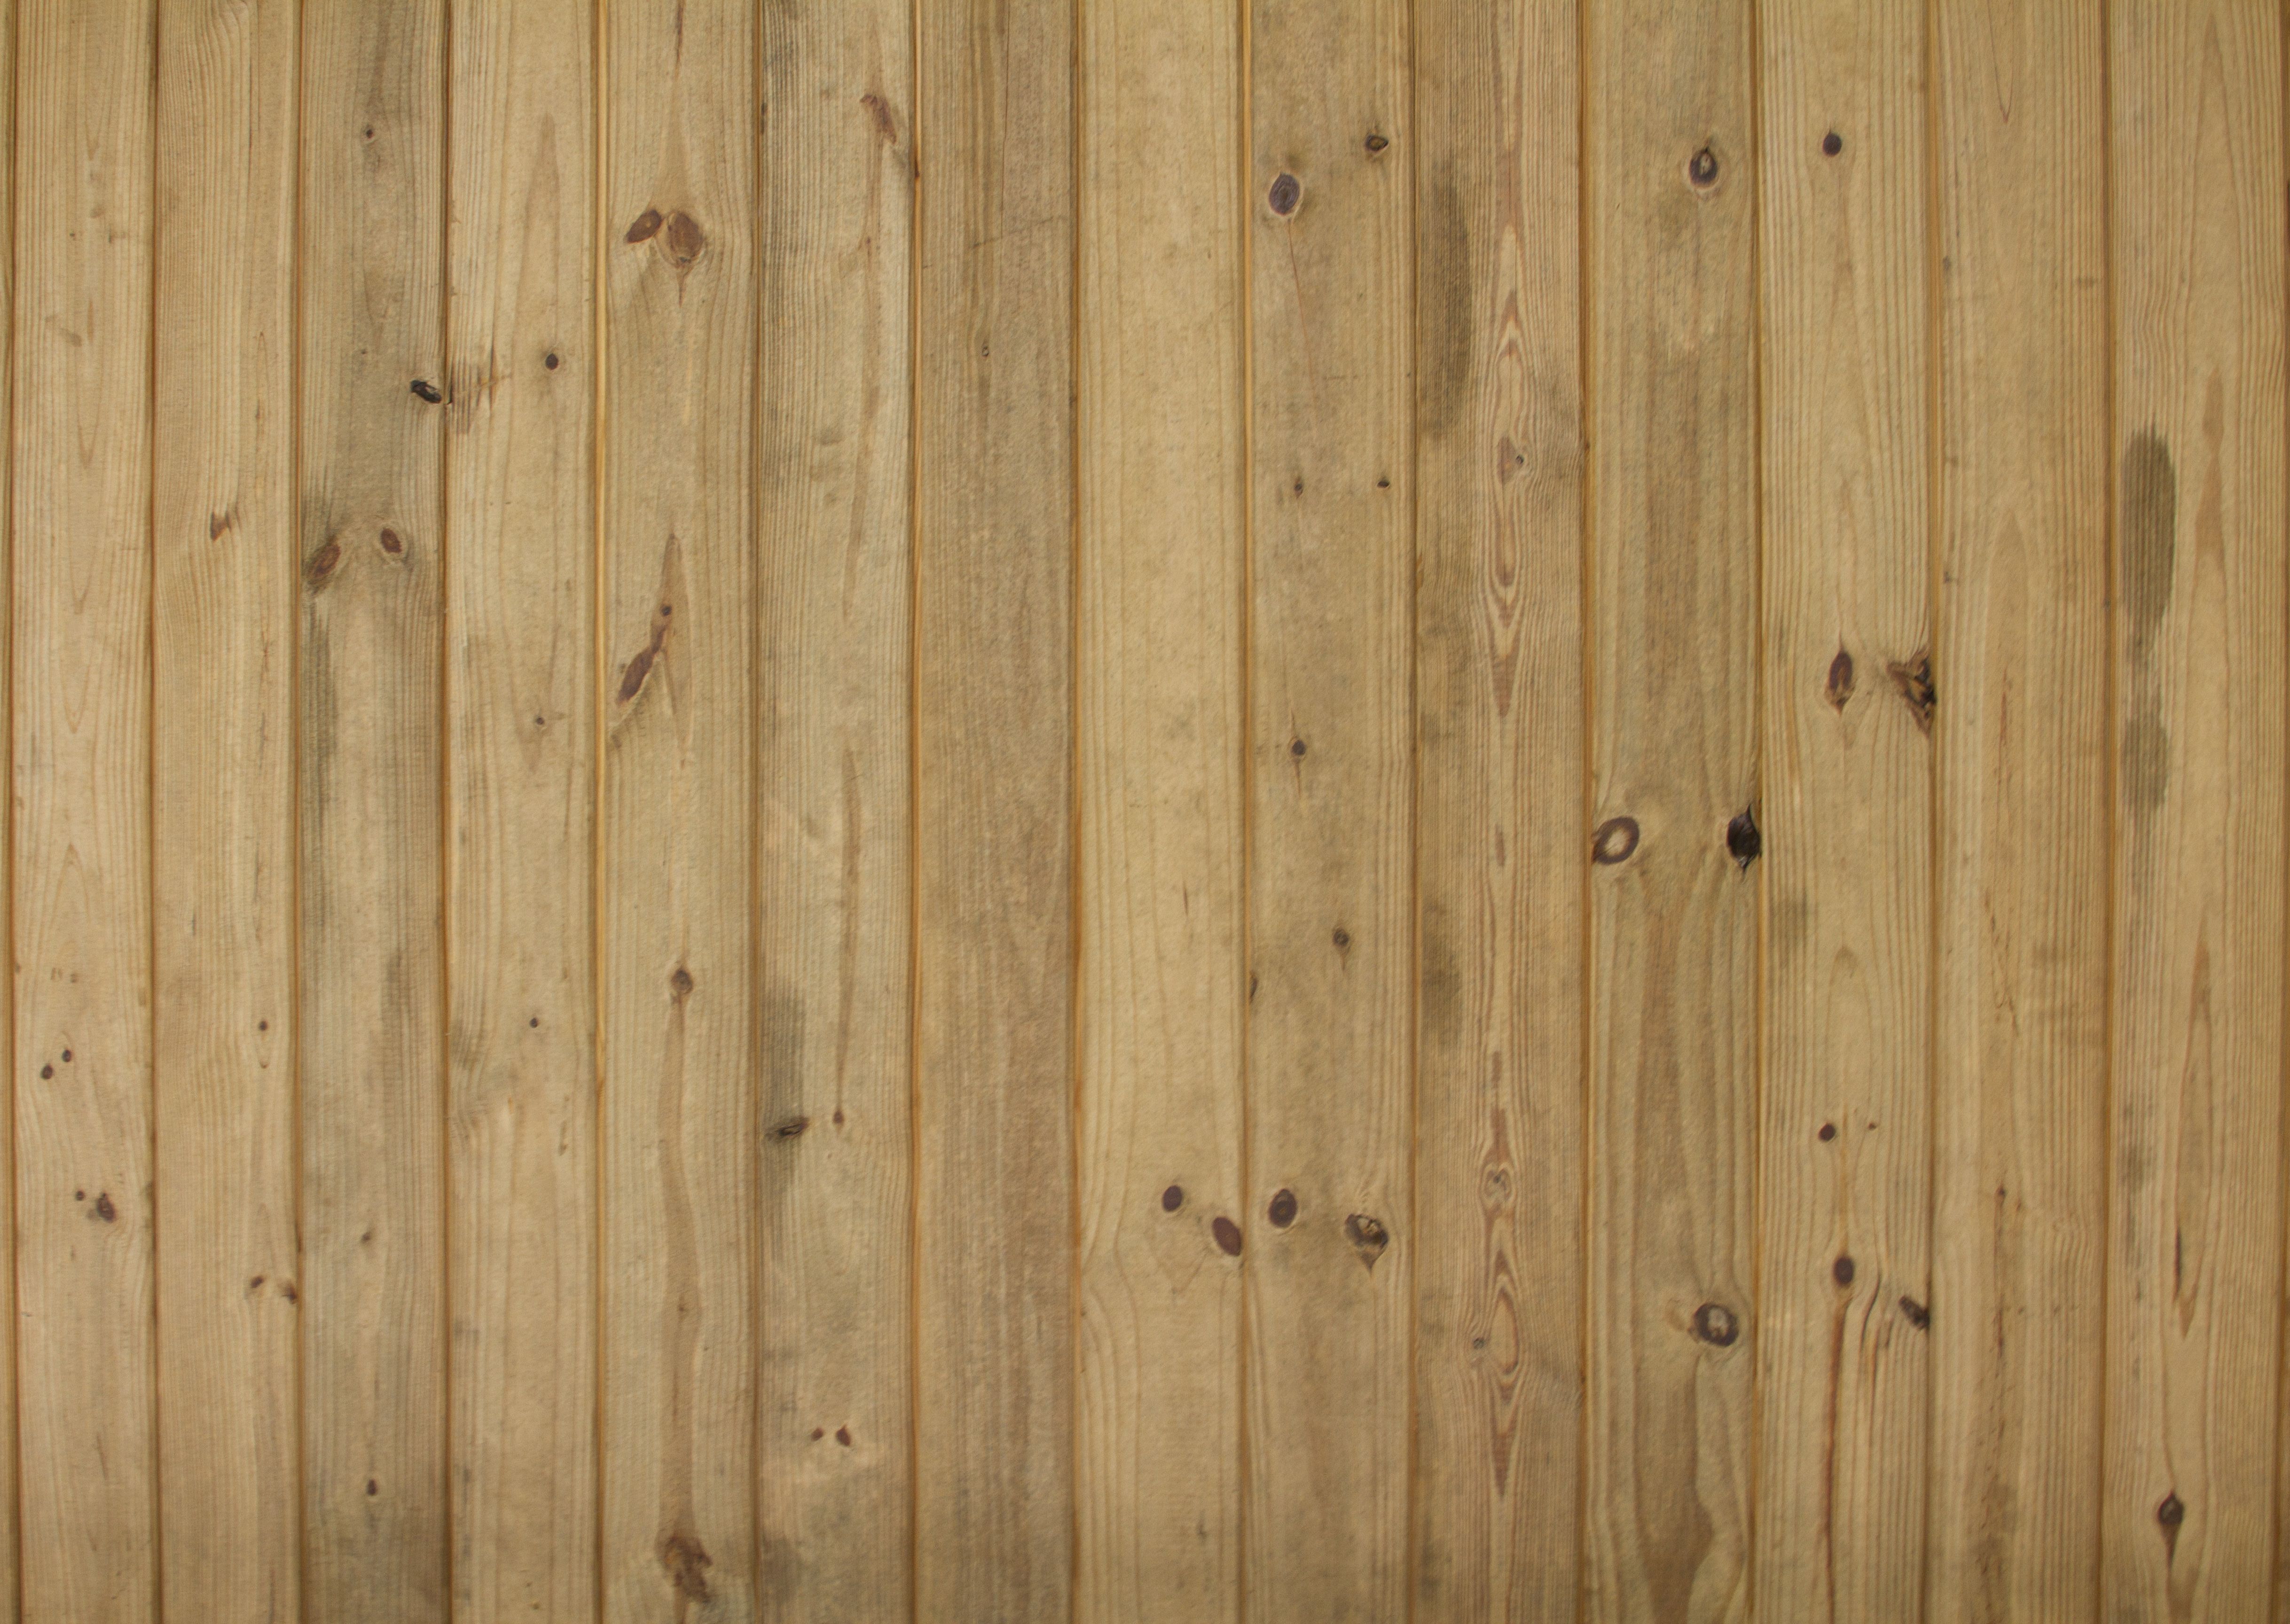 Natural-Wood-Panels-Texture-2.jpg (4872×3456) | Texture&Materials ...